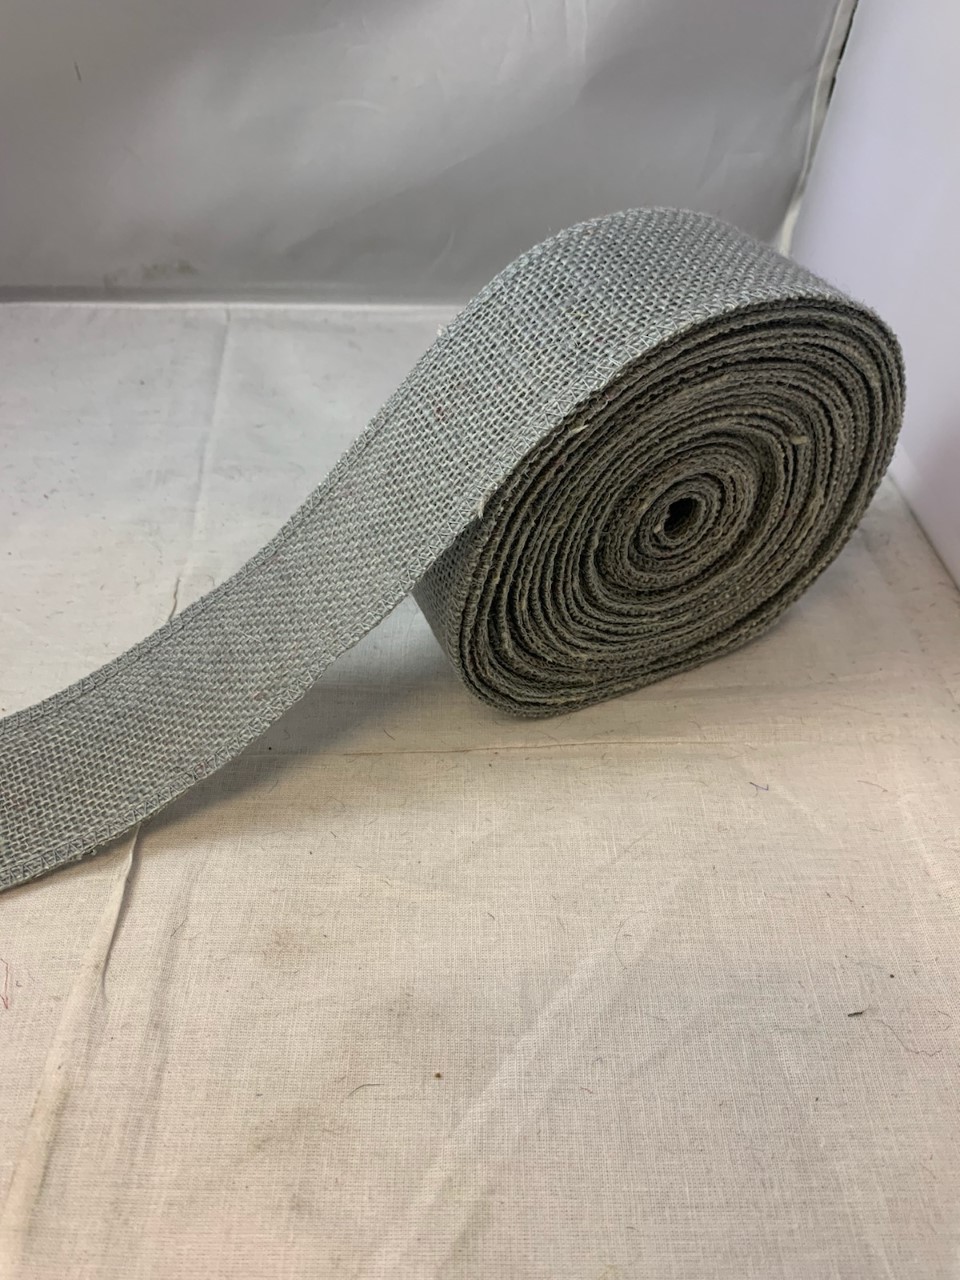 2" Light Grey Burlap Ribbon - 10 Yards (Serged) Made in USA